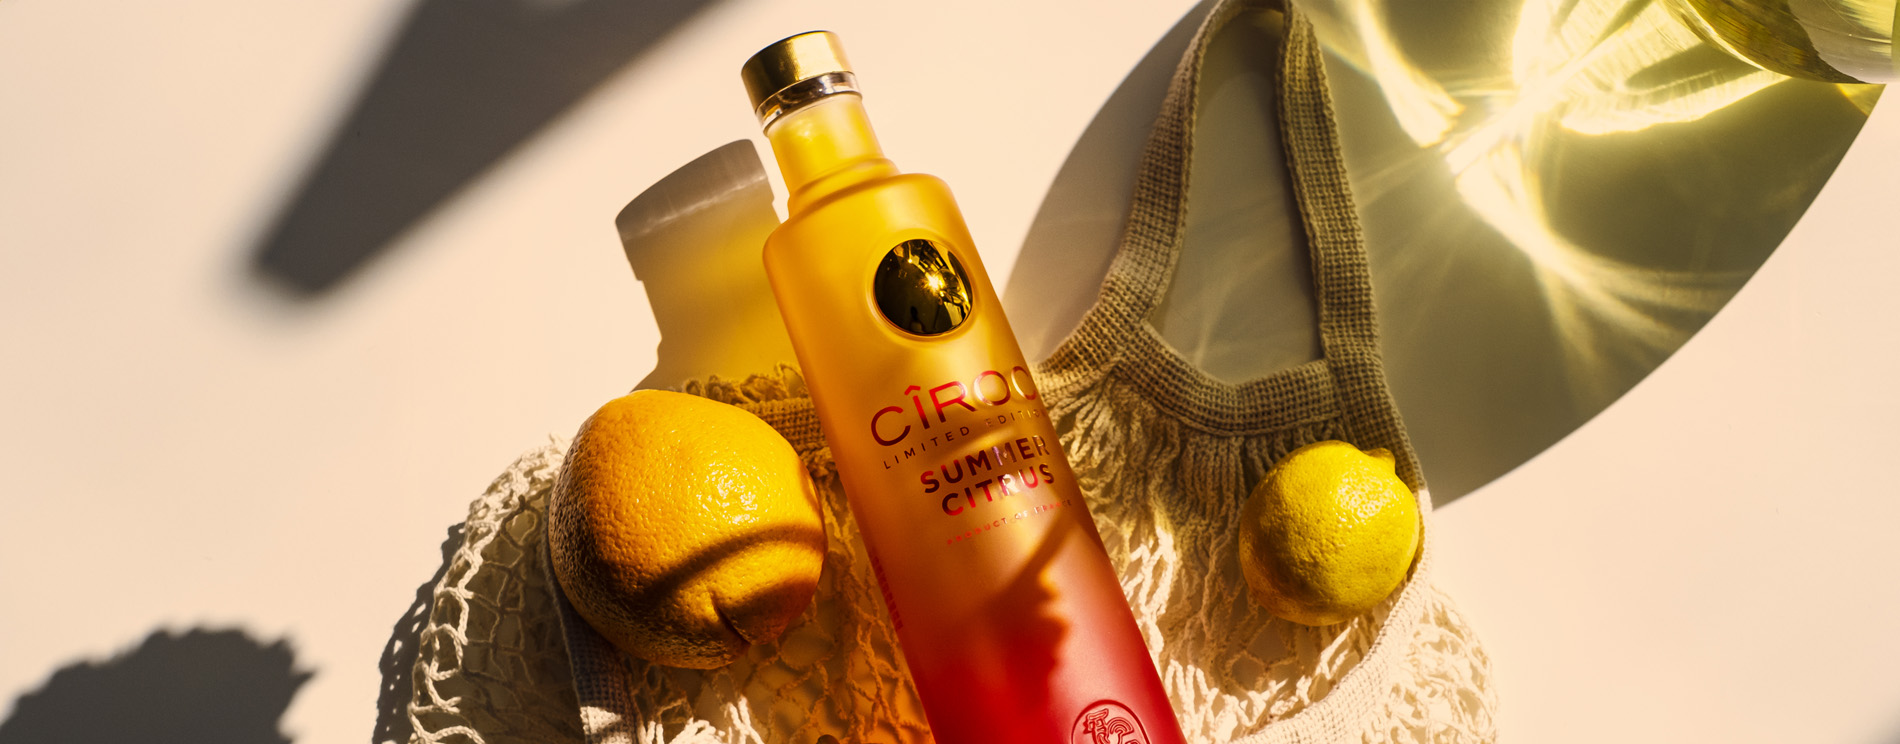 Cîroc Summer Citrus vodka in a bag of lemons